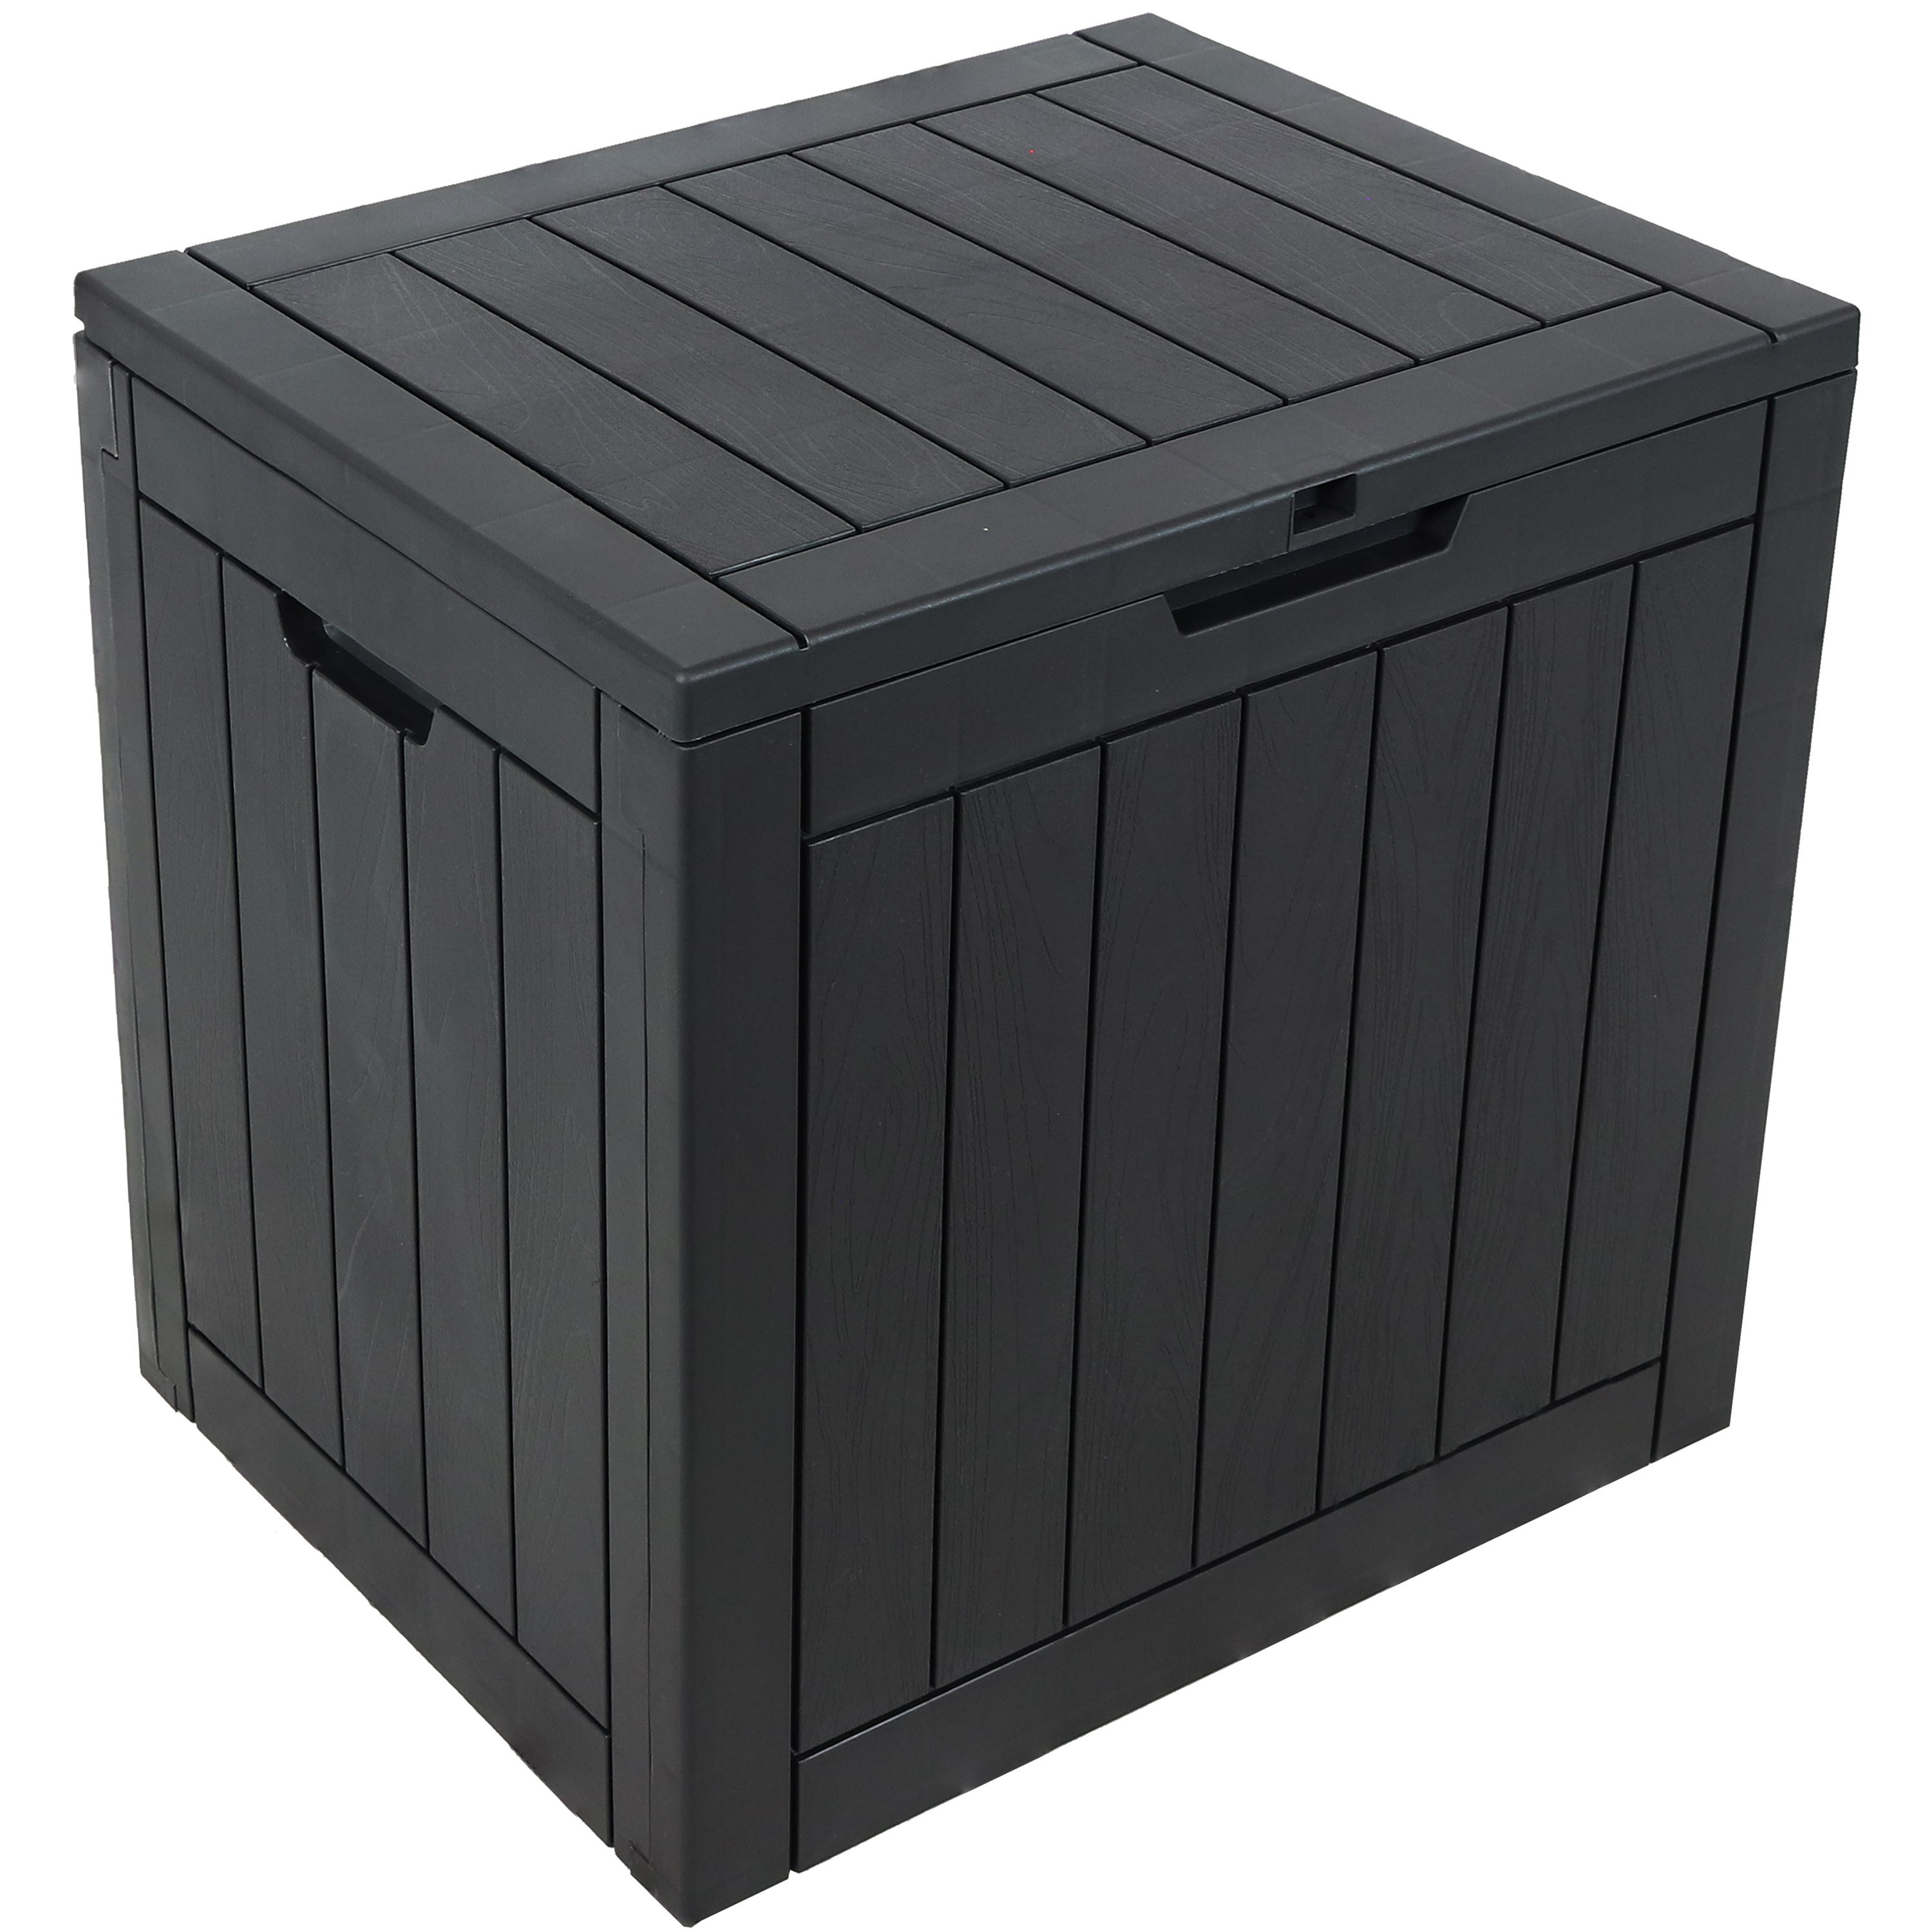 Faux Wood Grain Outdoor Storage Box - Phantom Gray